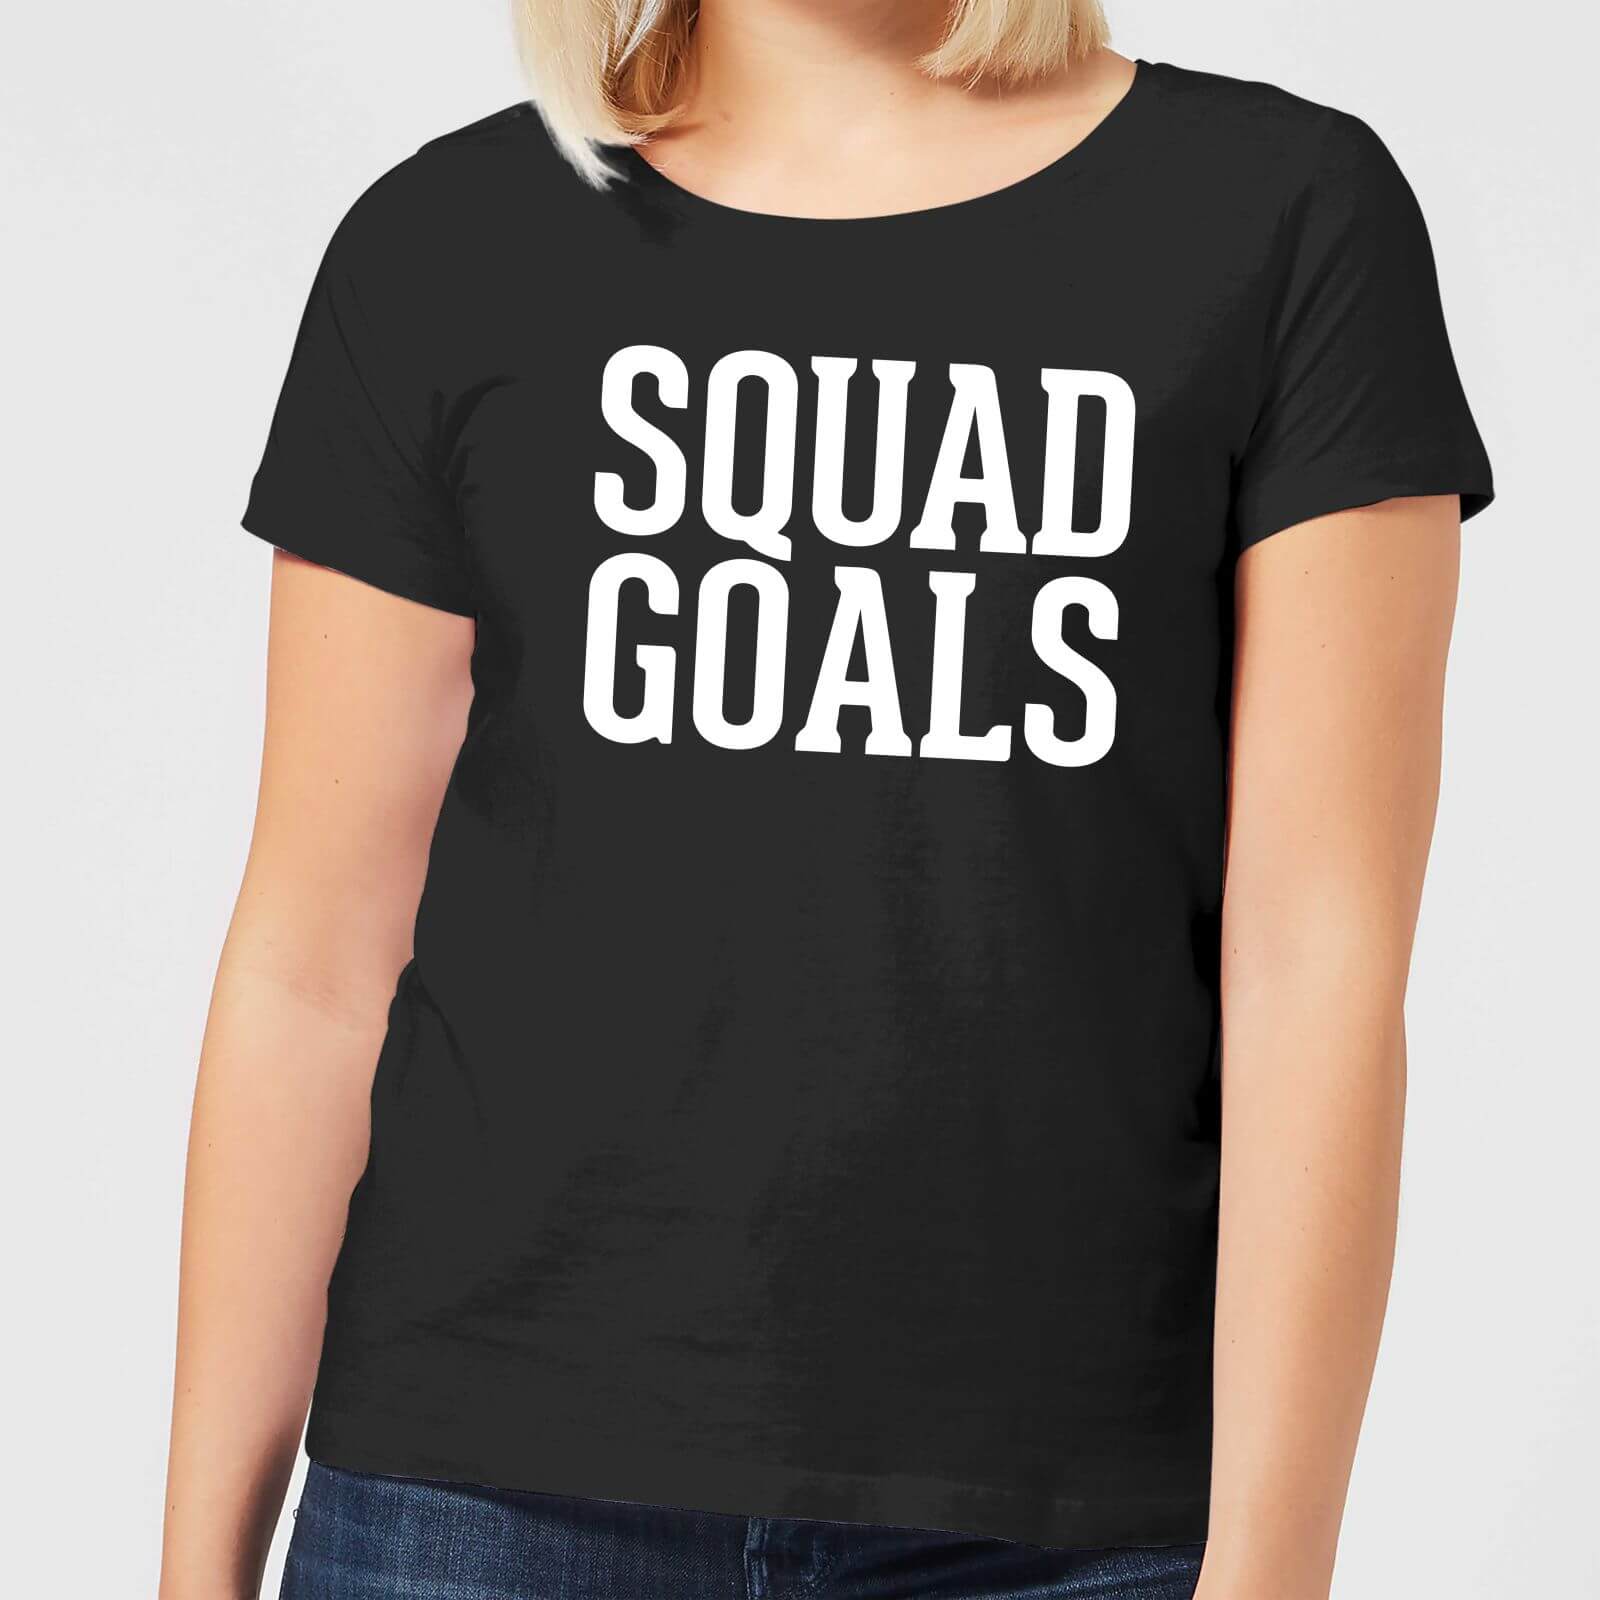 Squad Goals Women's T-Shirt - Black - 3XL - Black